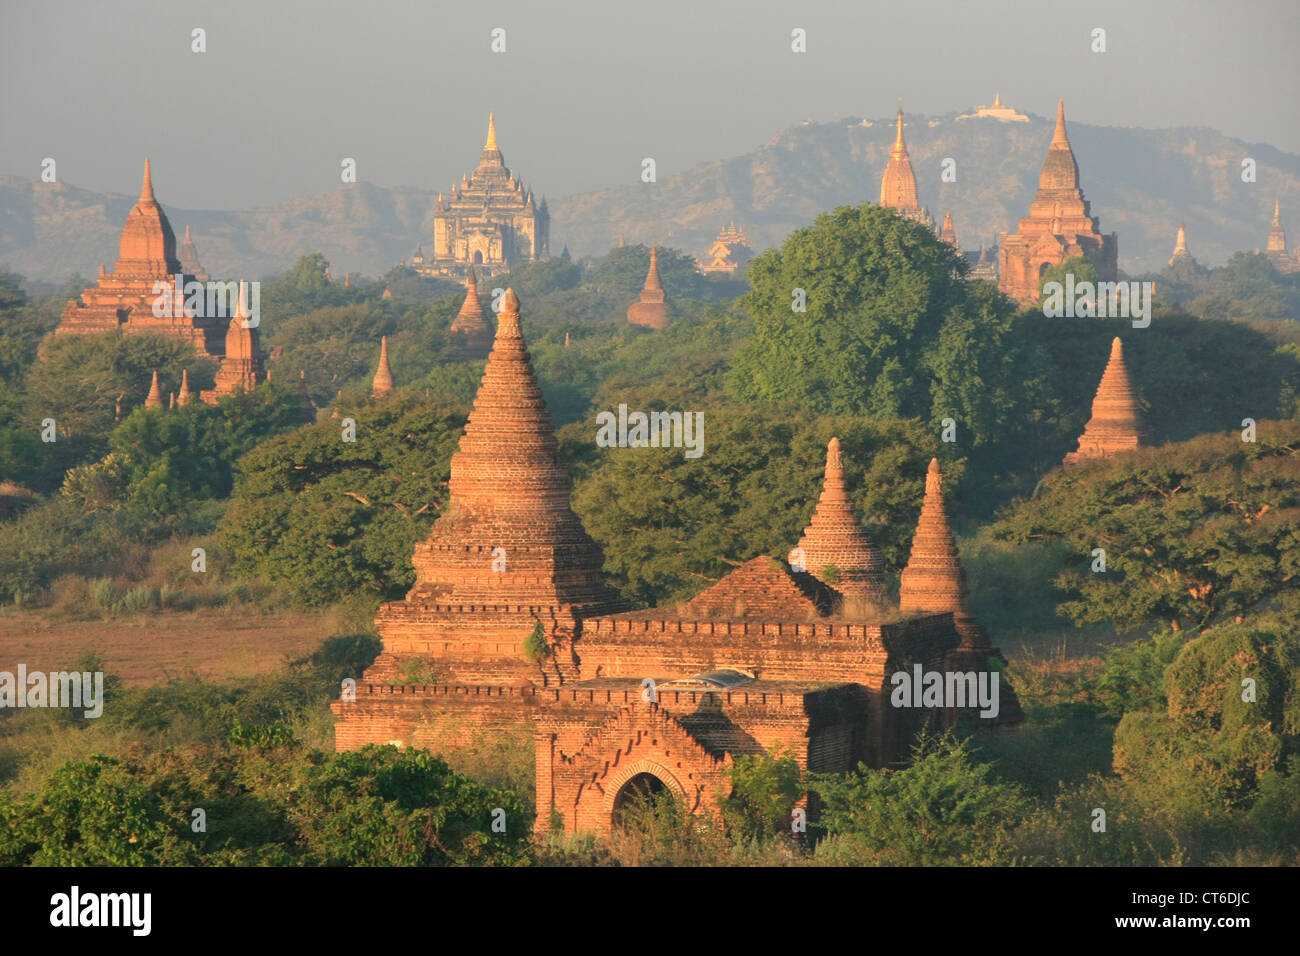 Temples of Bagan, Bagan Archaeological Zone, Mandalay region, Myanmar, Southeast Asia Stock Photo